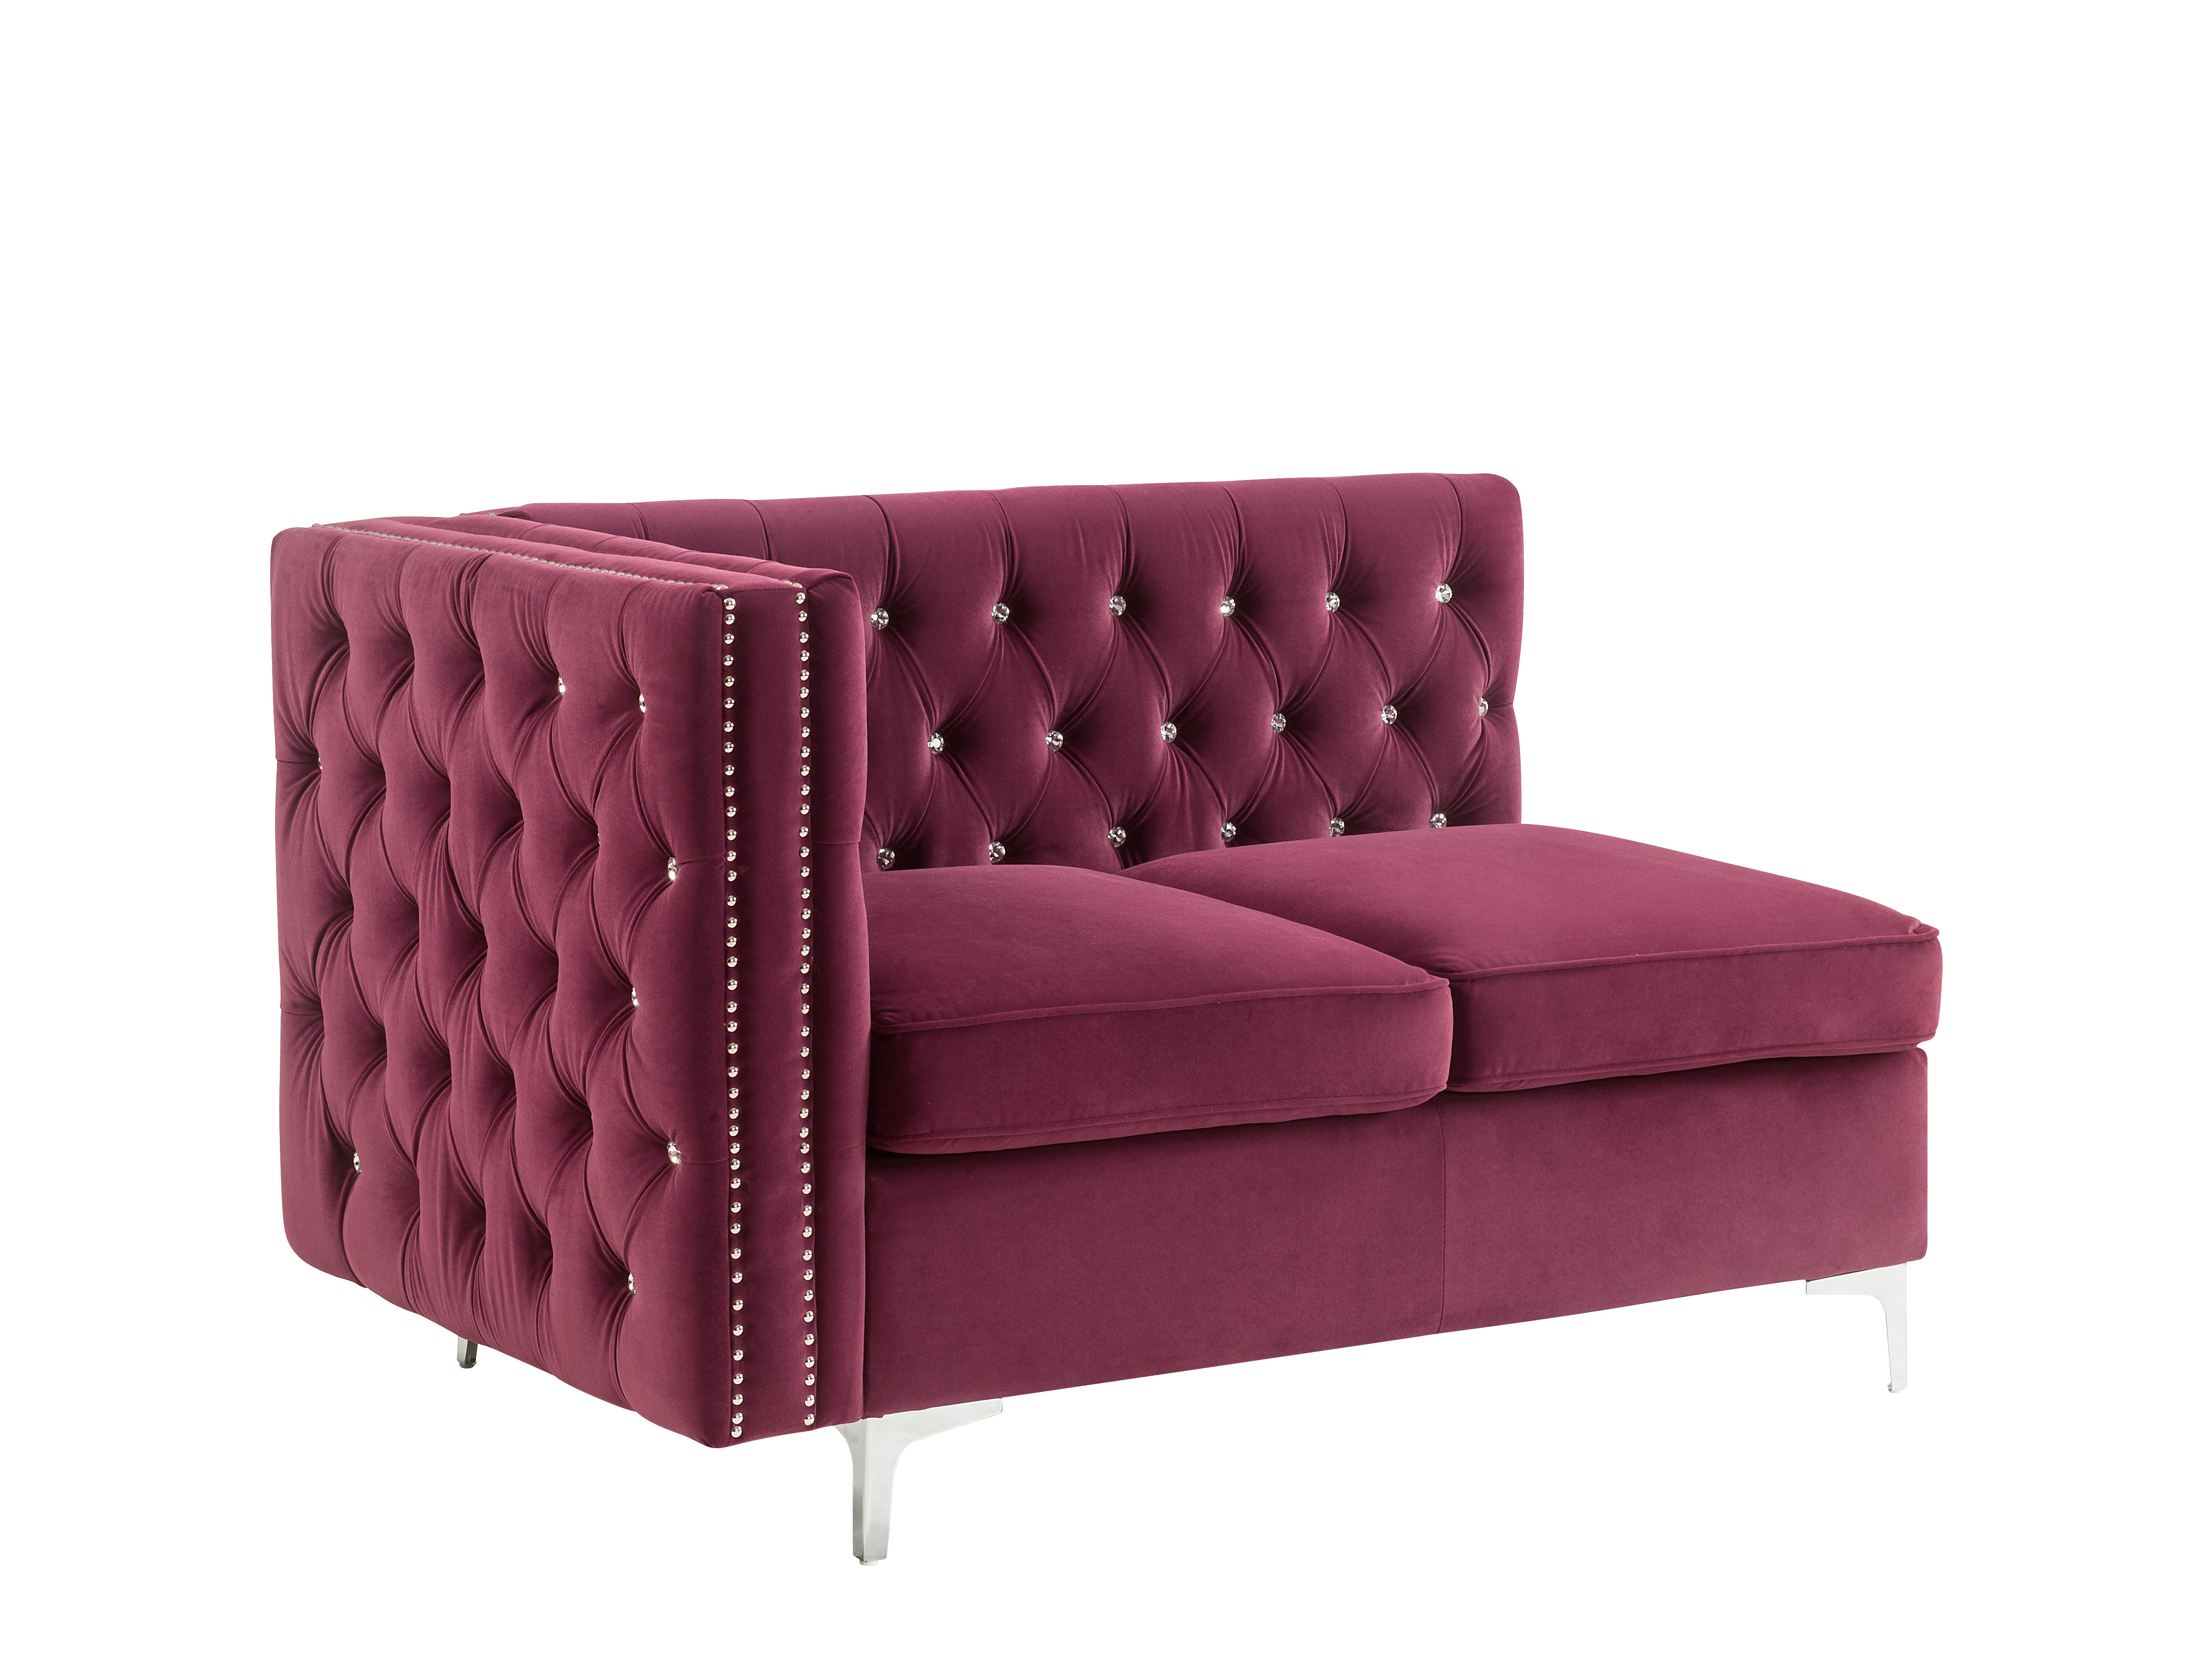 ACME Furniture Sofas & Couches - ACME Jaszira Modular - Armless Loveseat w/2 Pillows, Burgundy Velvet